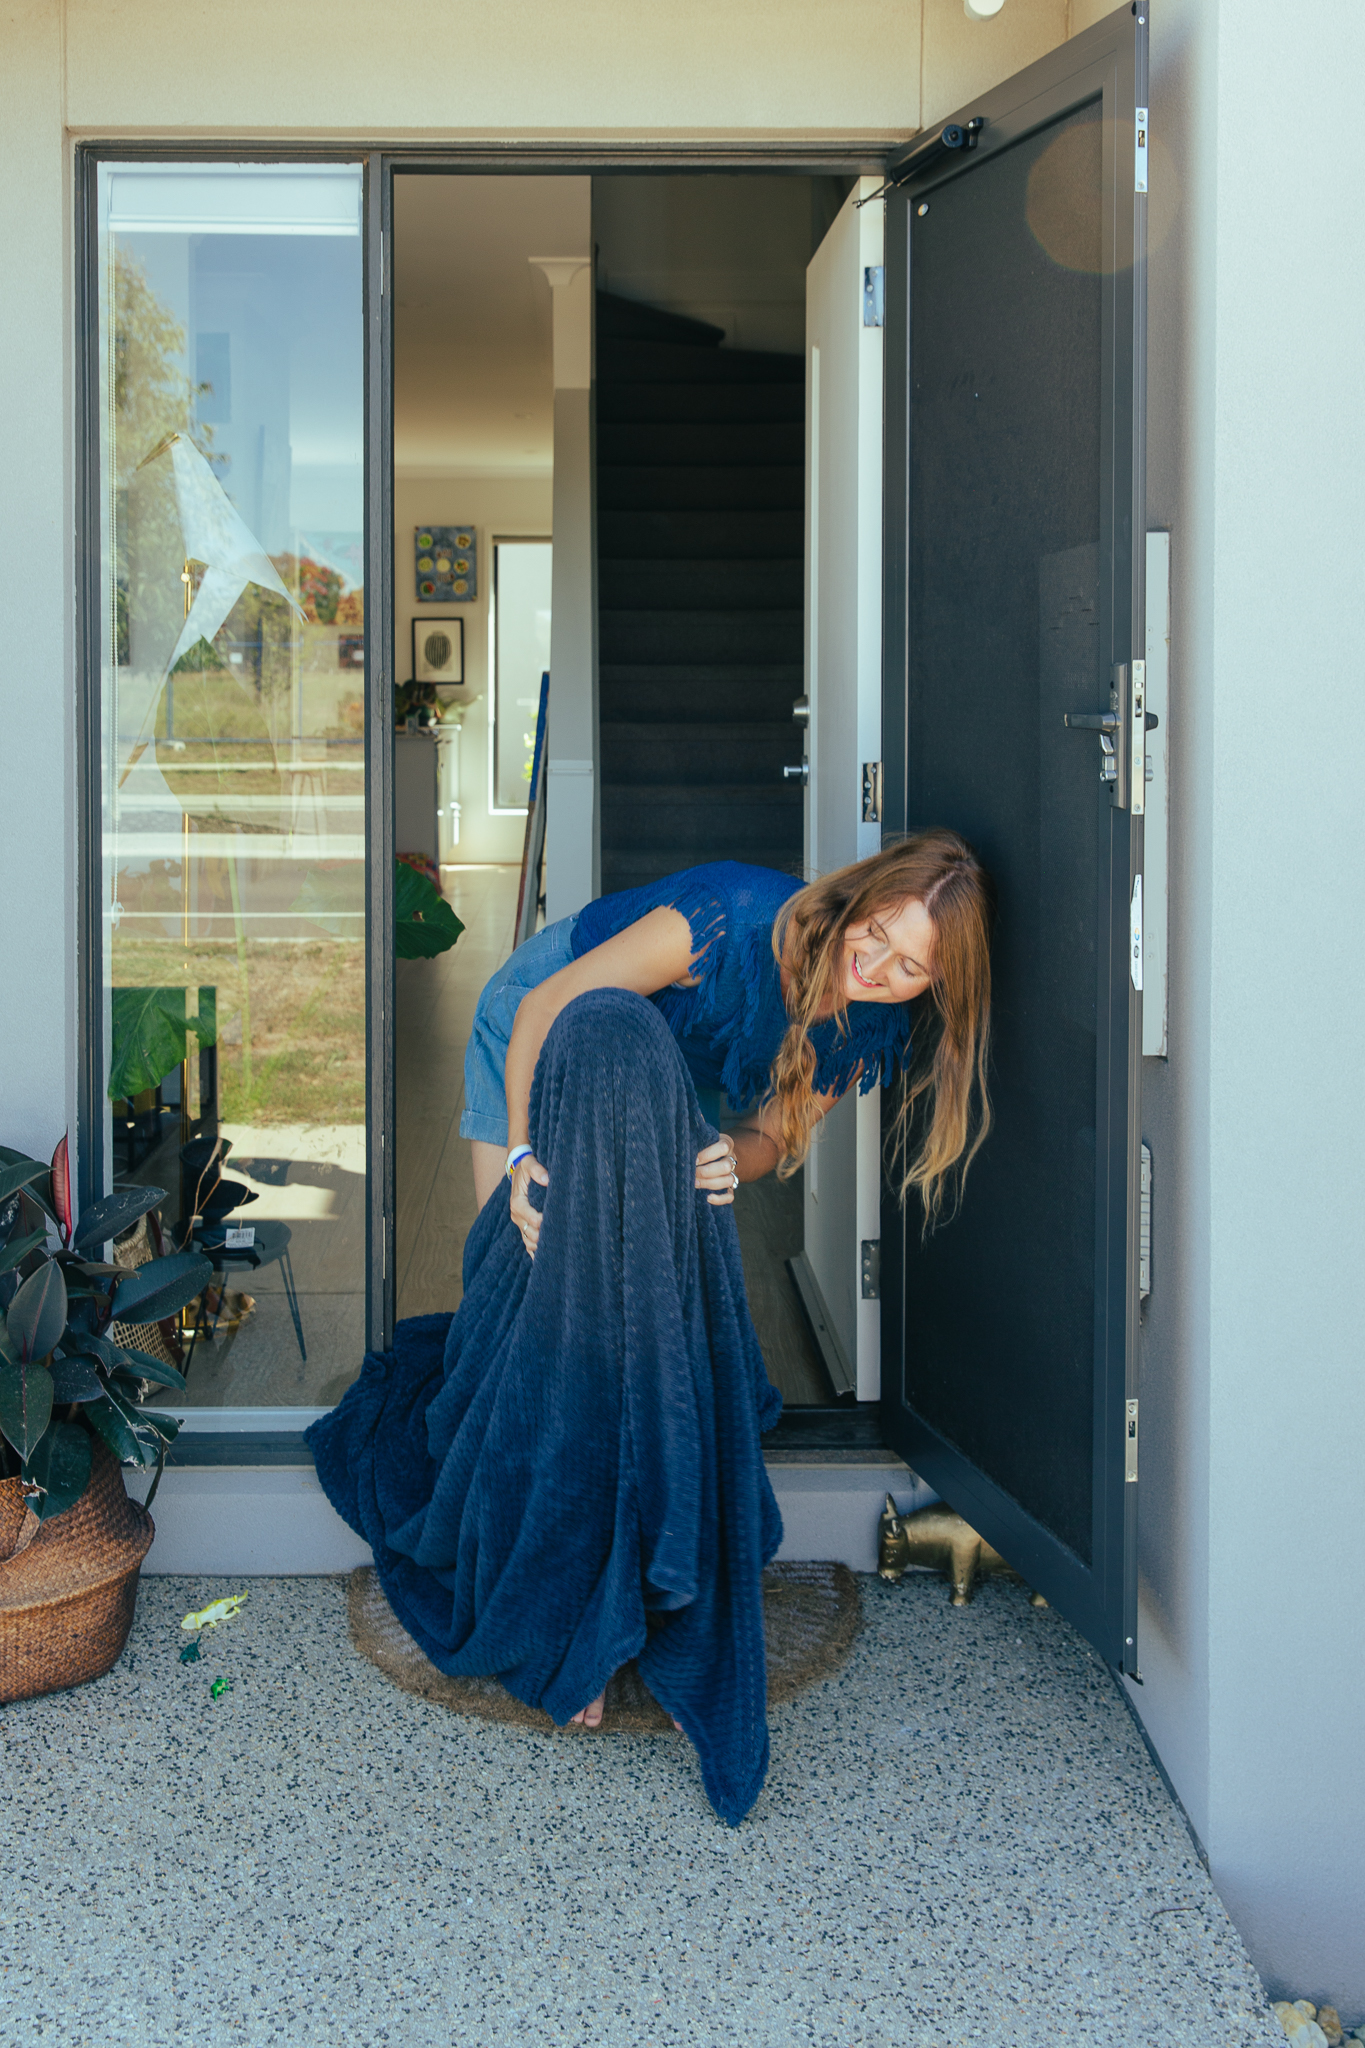 Female artist Kate Rogers in the doorway of her home